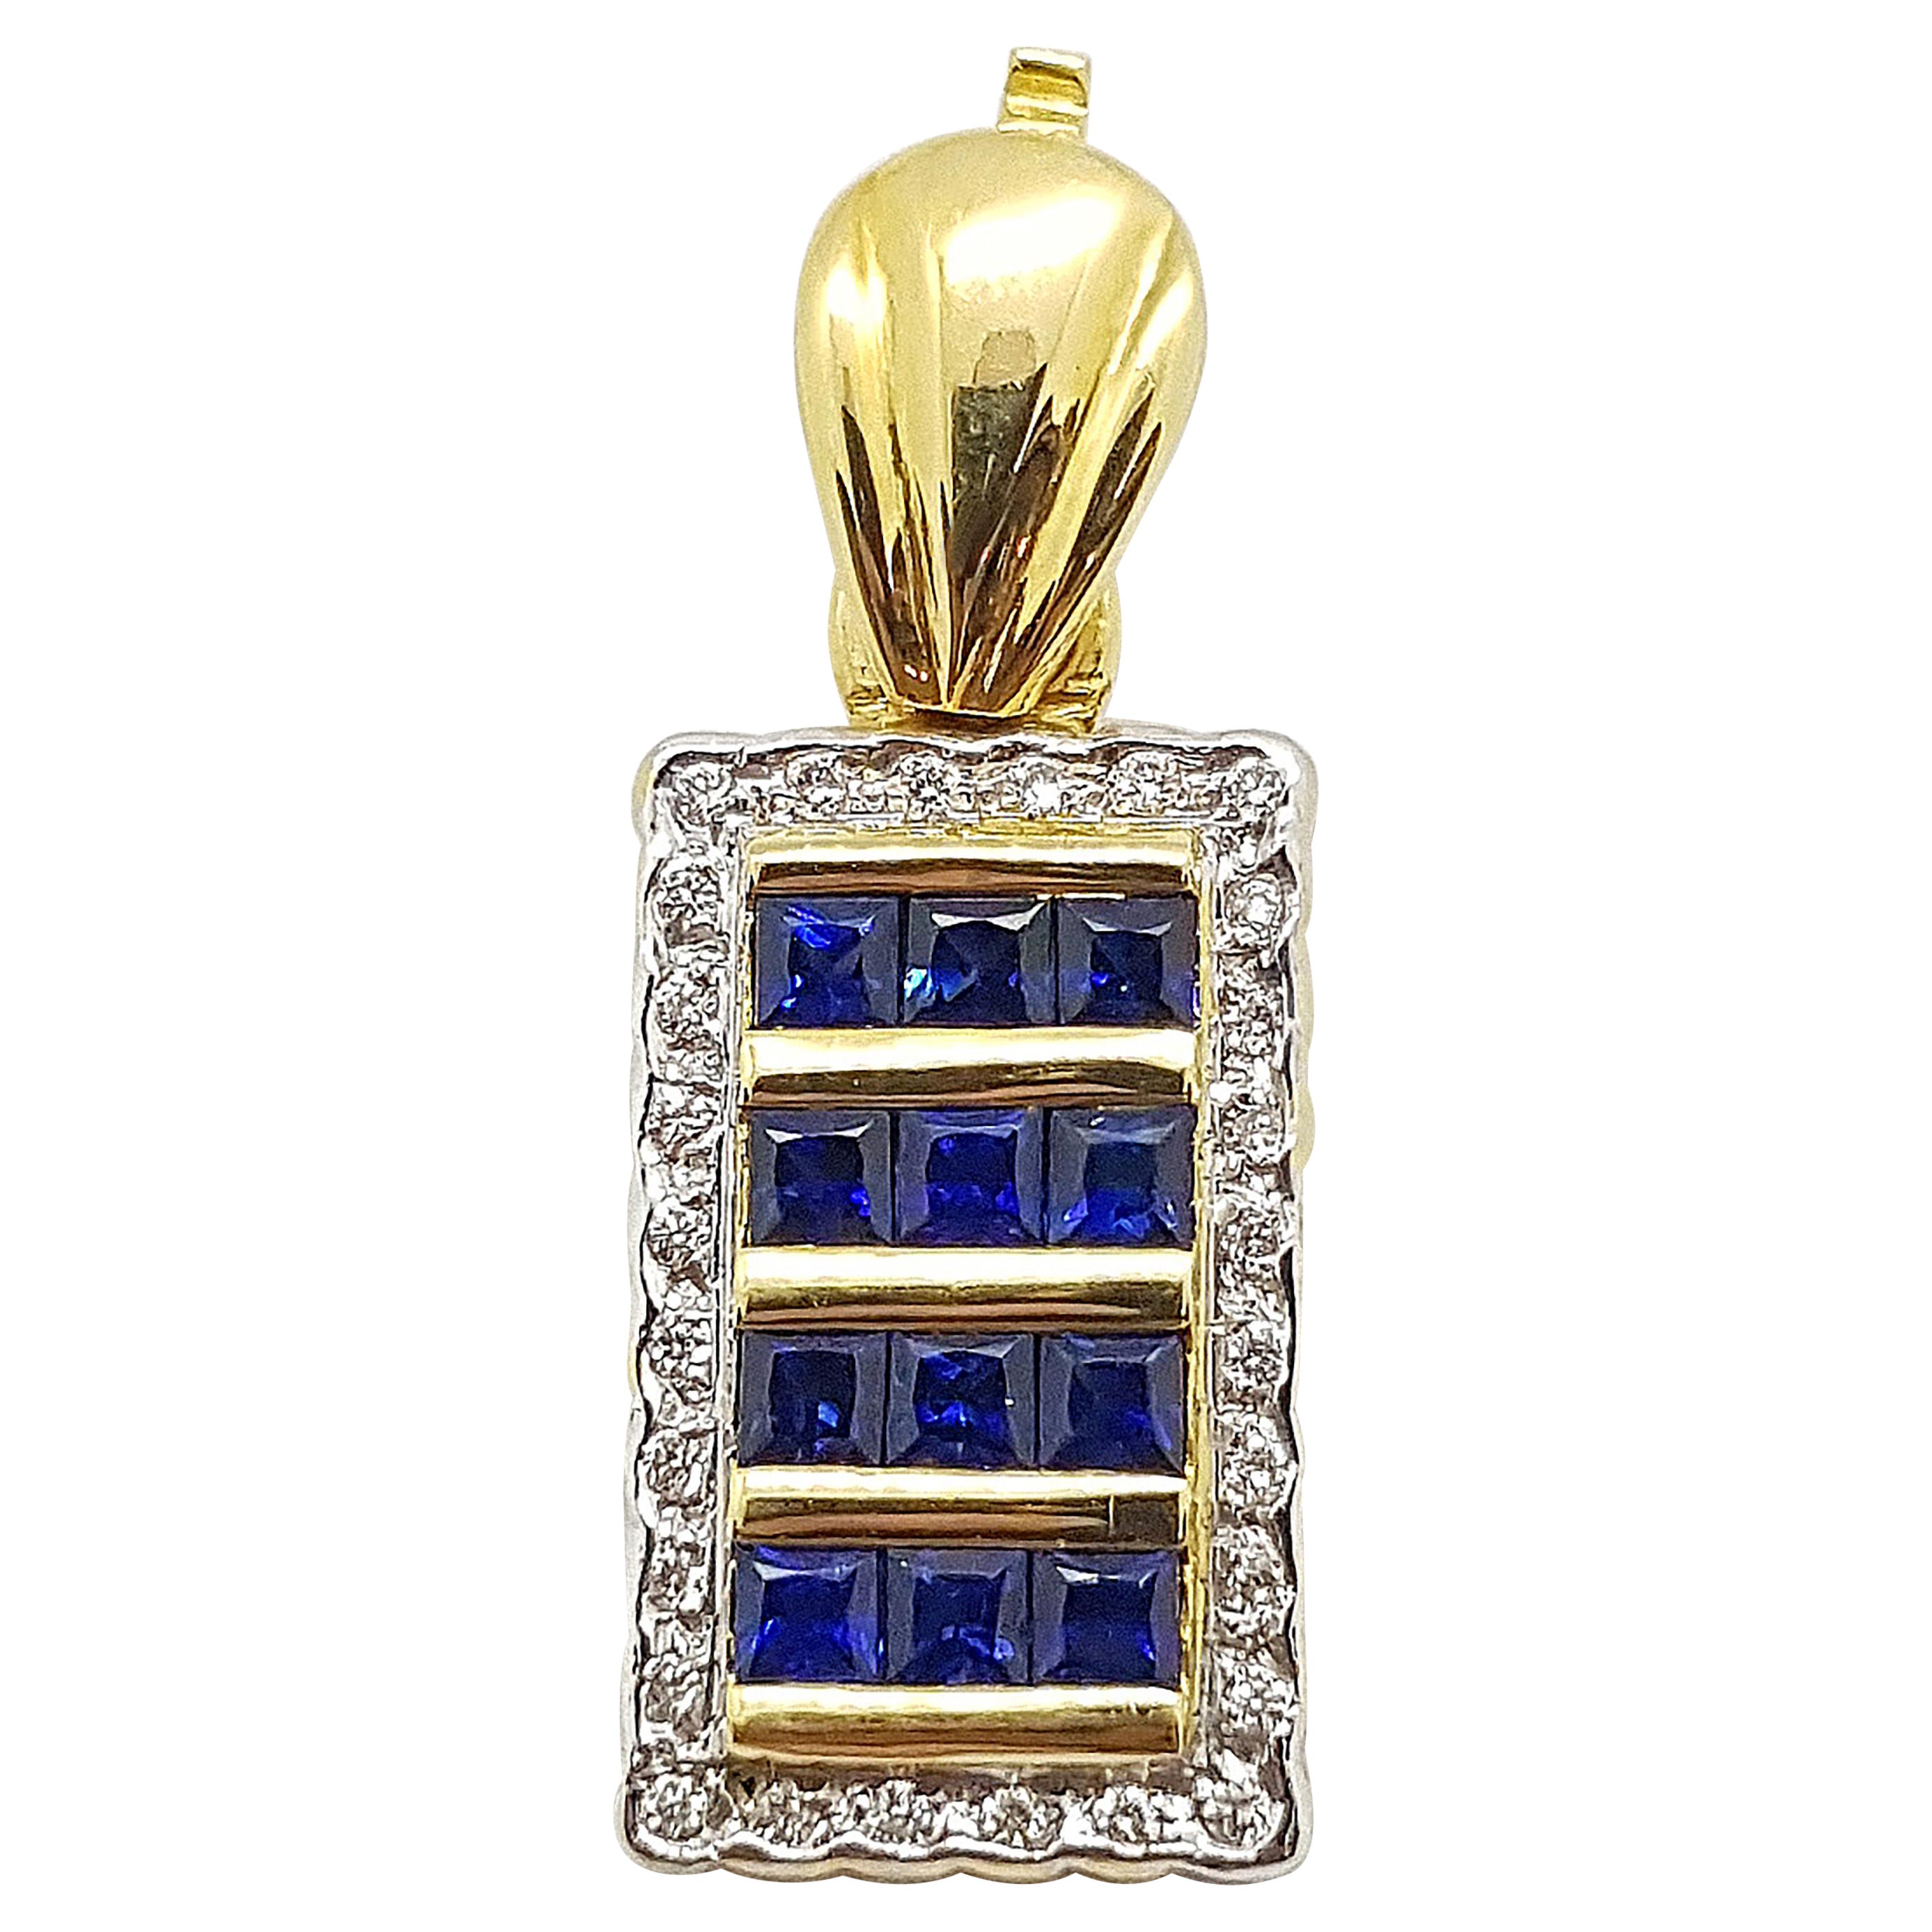 Blue Sapphire with Diamond Pendant Set in 18 Karat Gold Settings